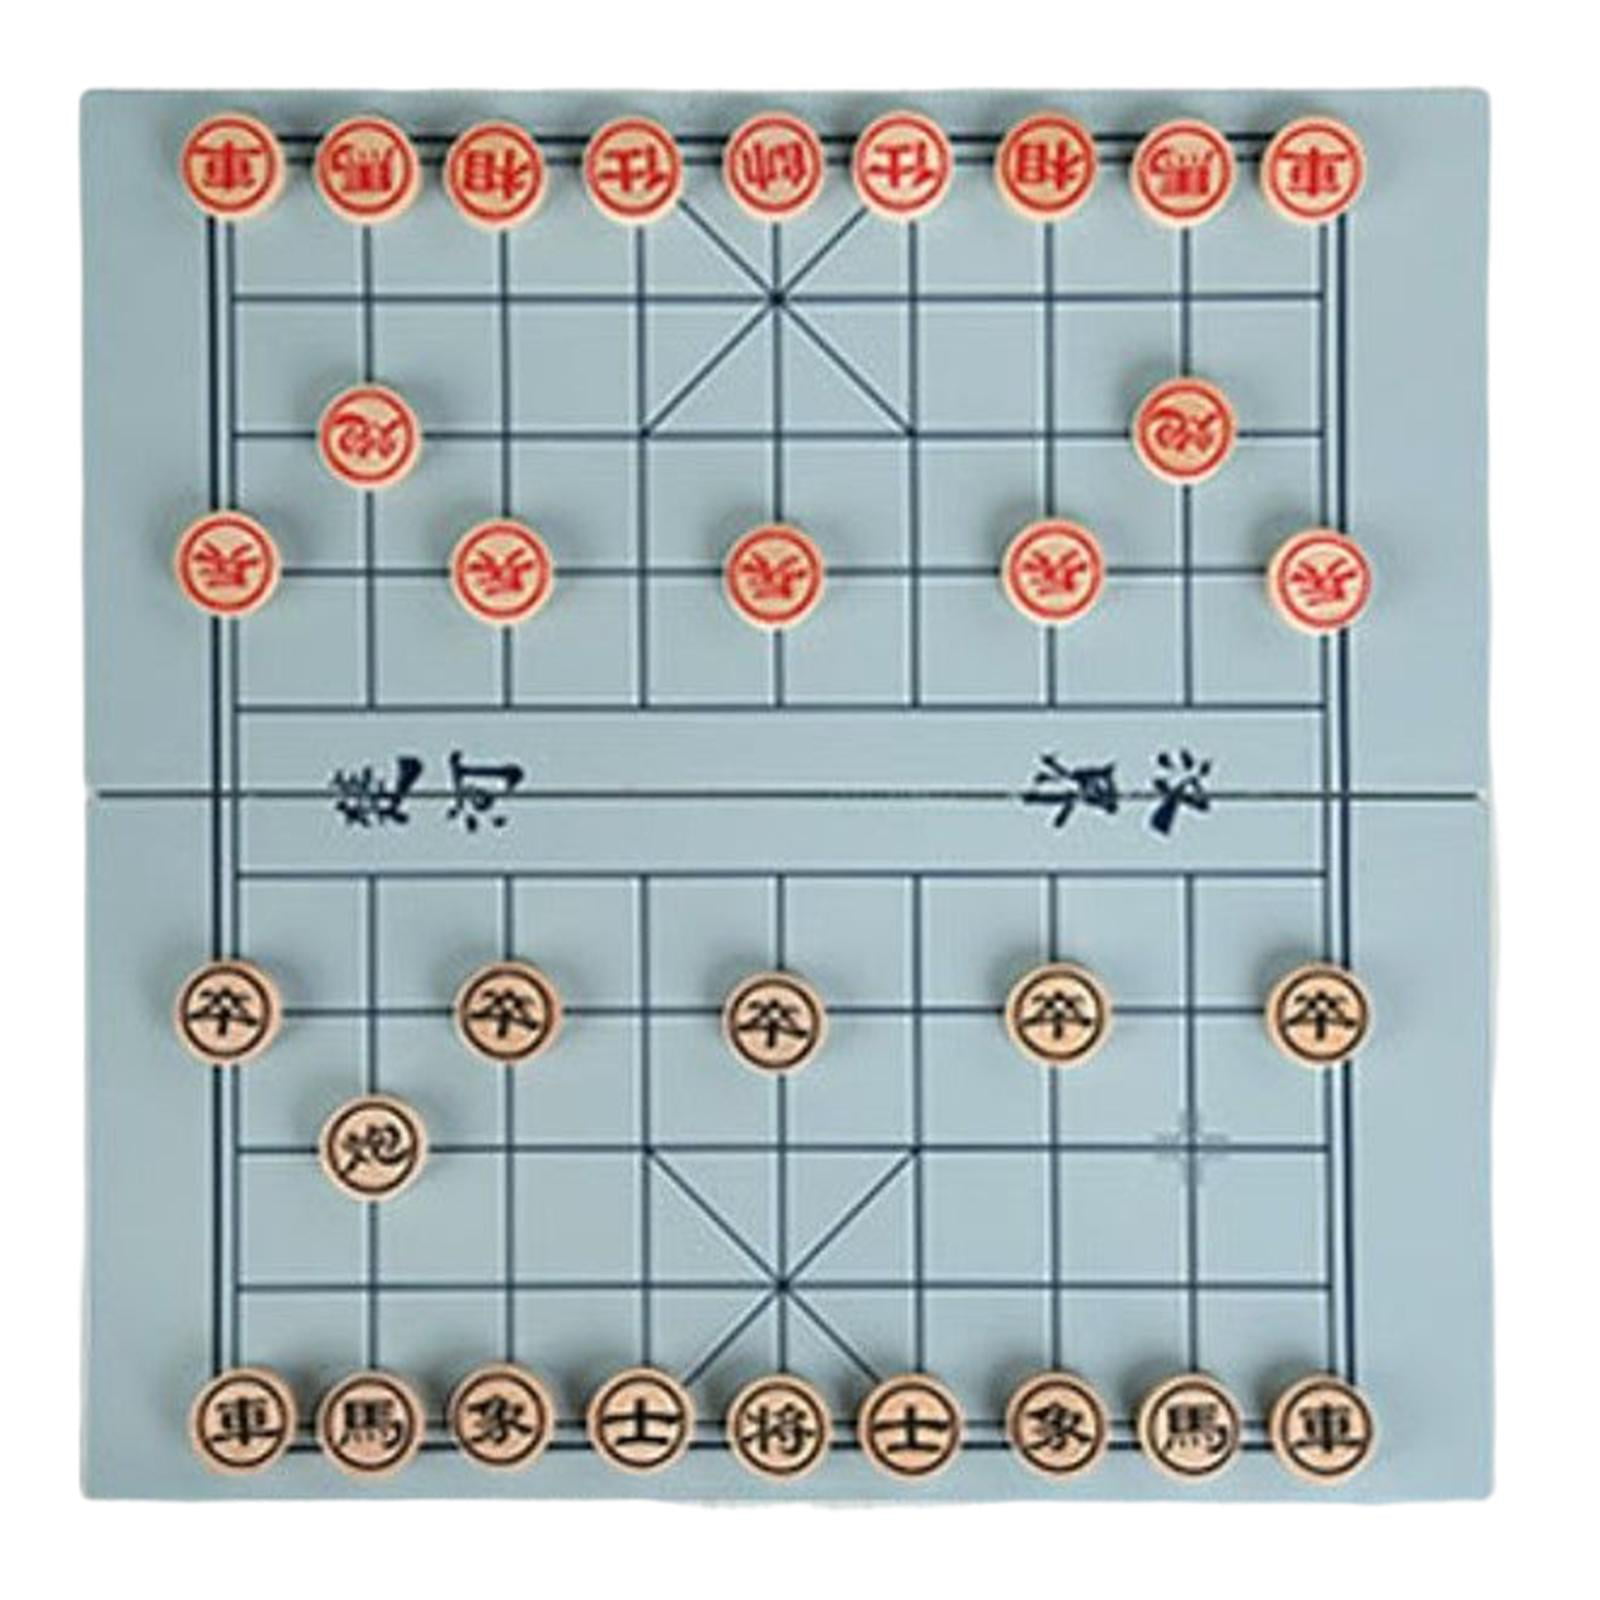 Xadrez chinês portátil (xiangqi) jogo de tabuleiro de viagem